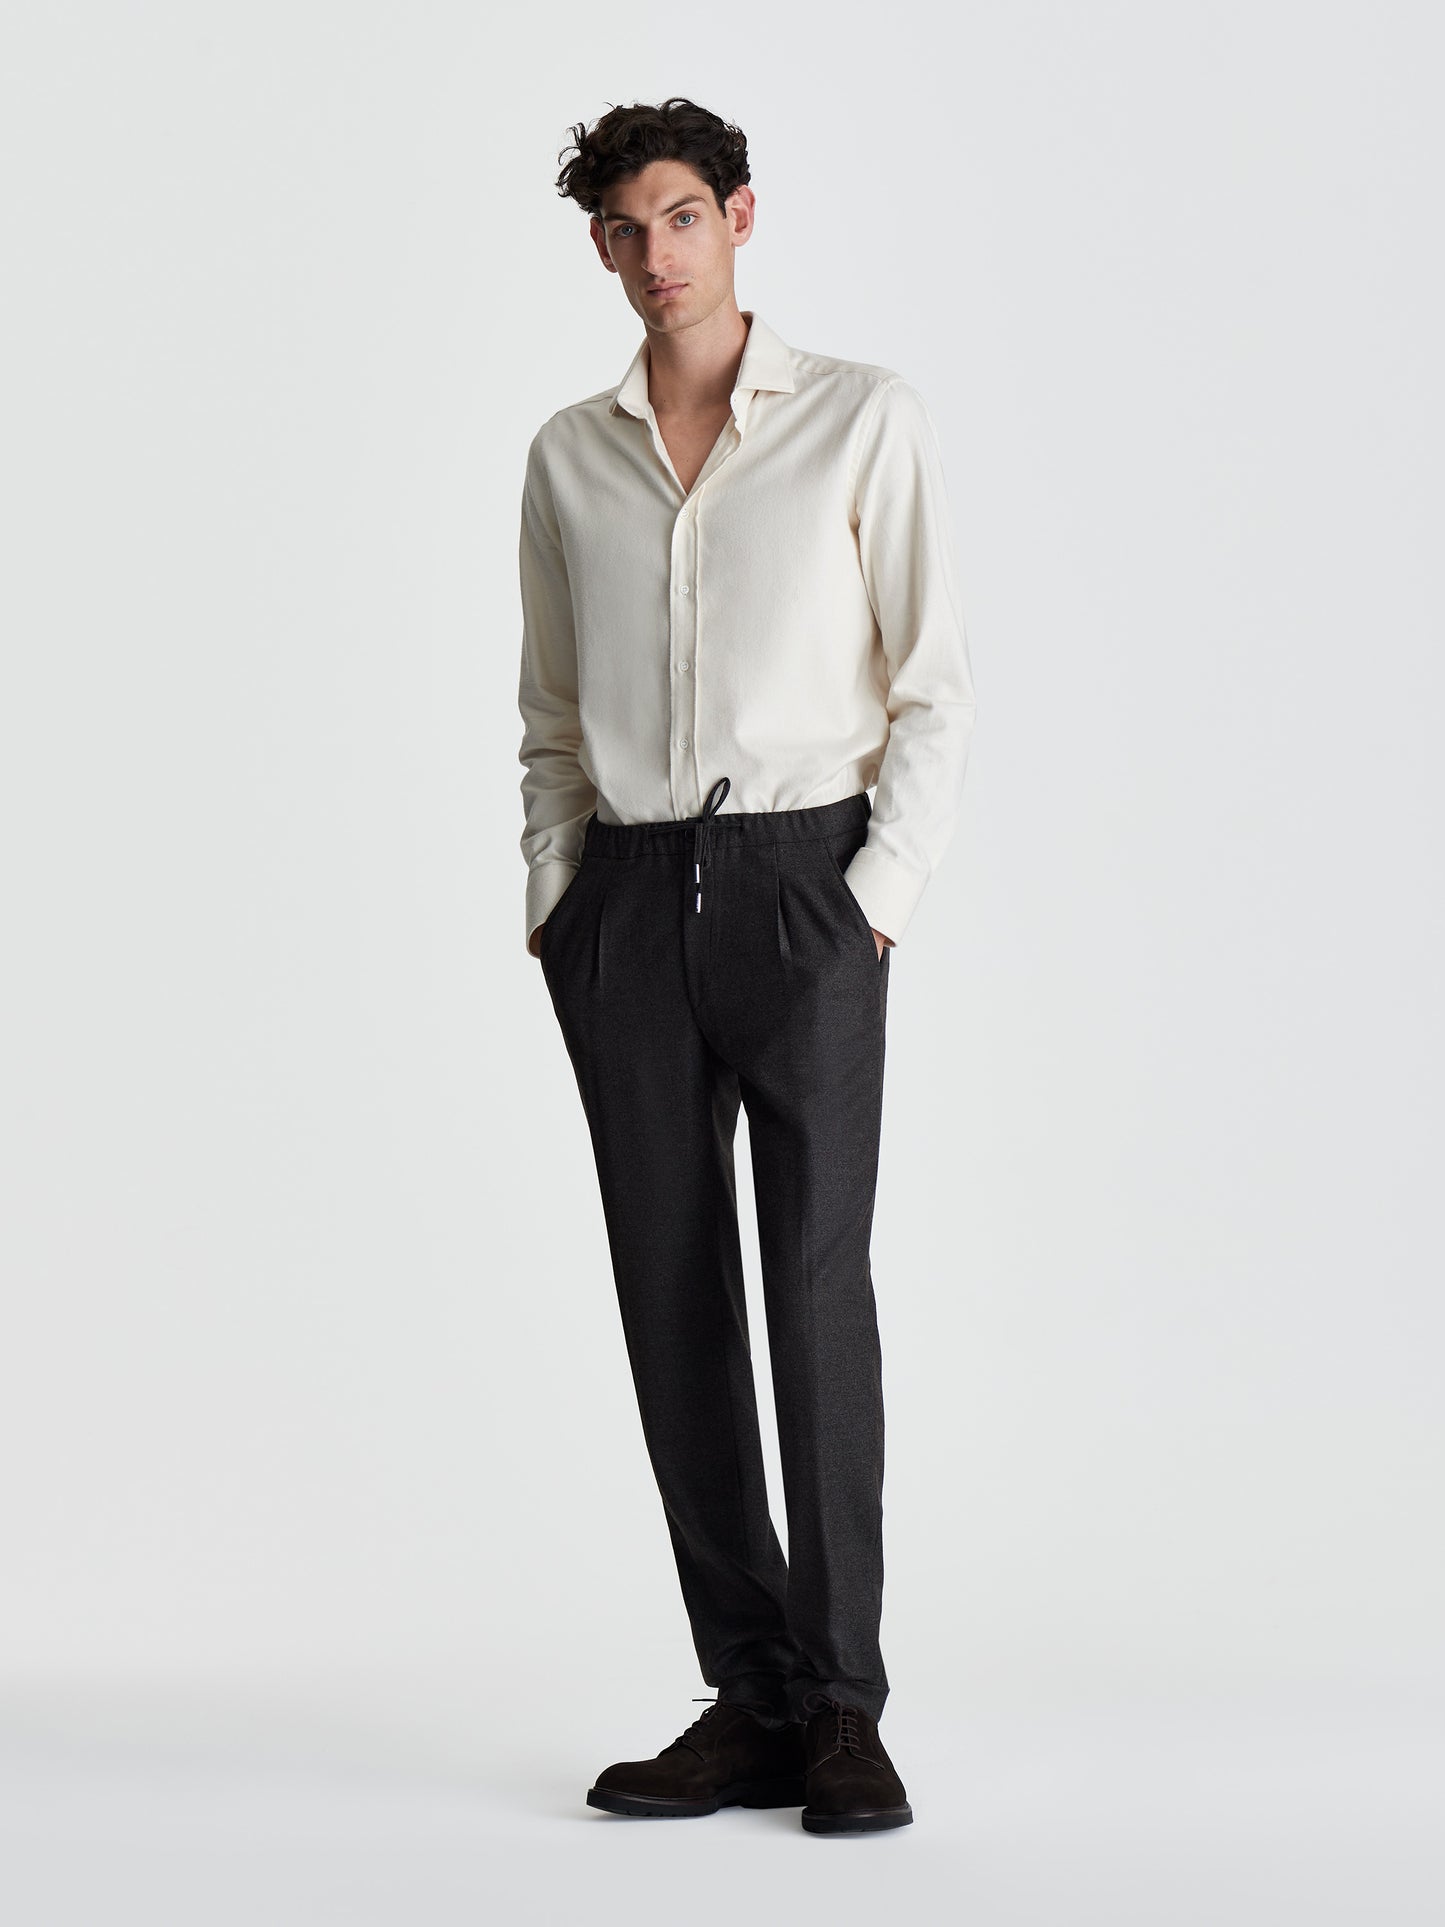 Flannel Cutaway Collar Shirt Oat Full Length Model Image